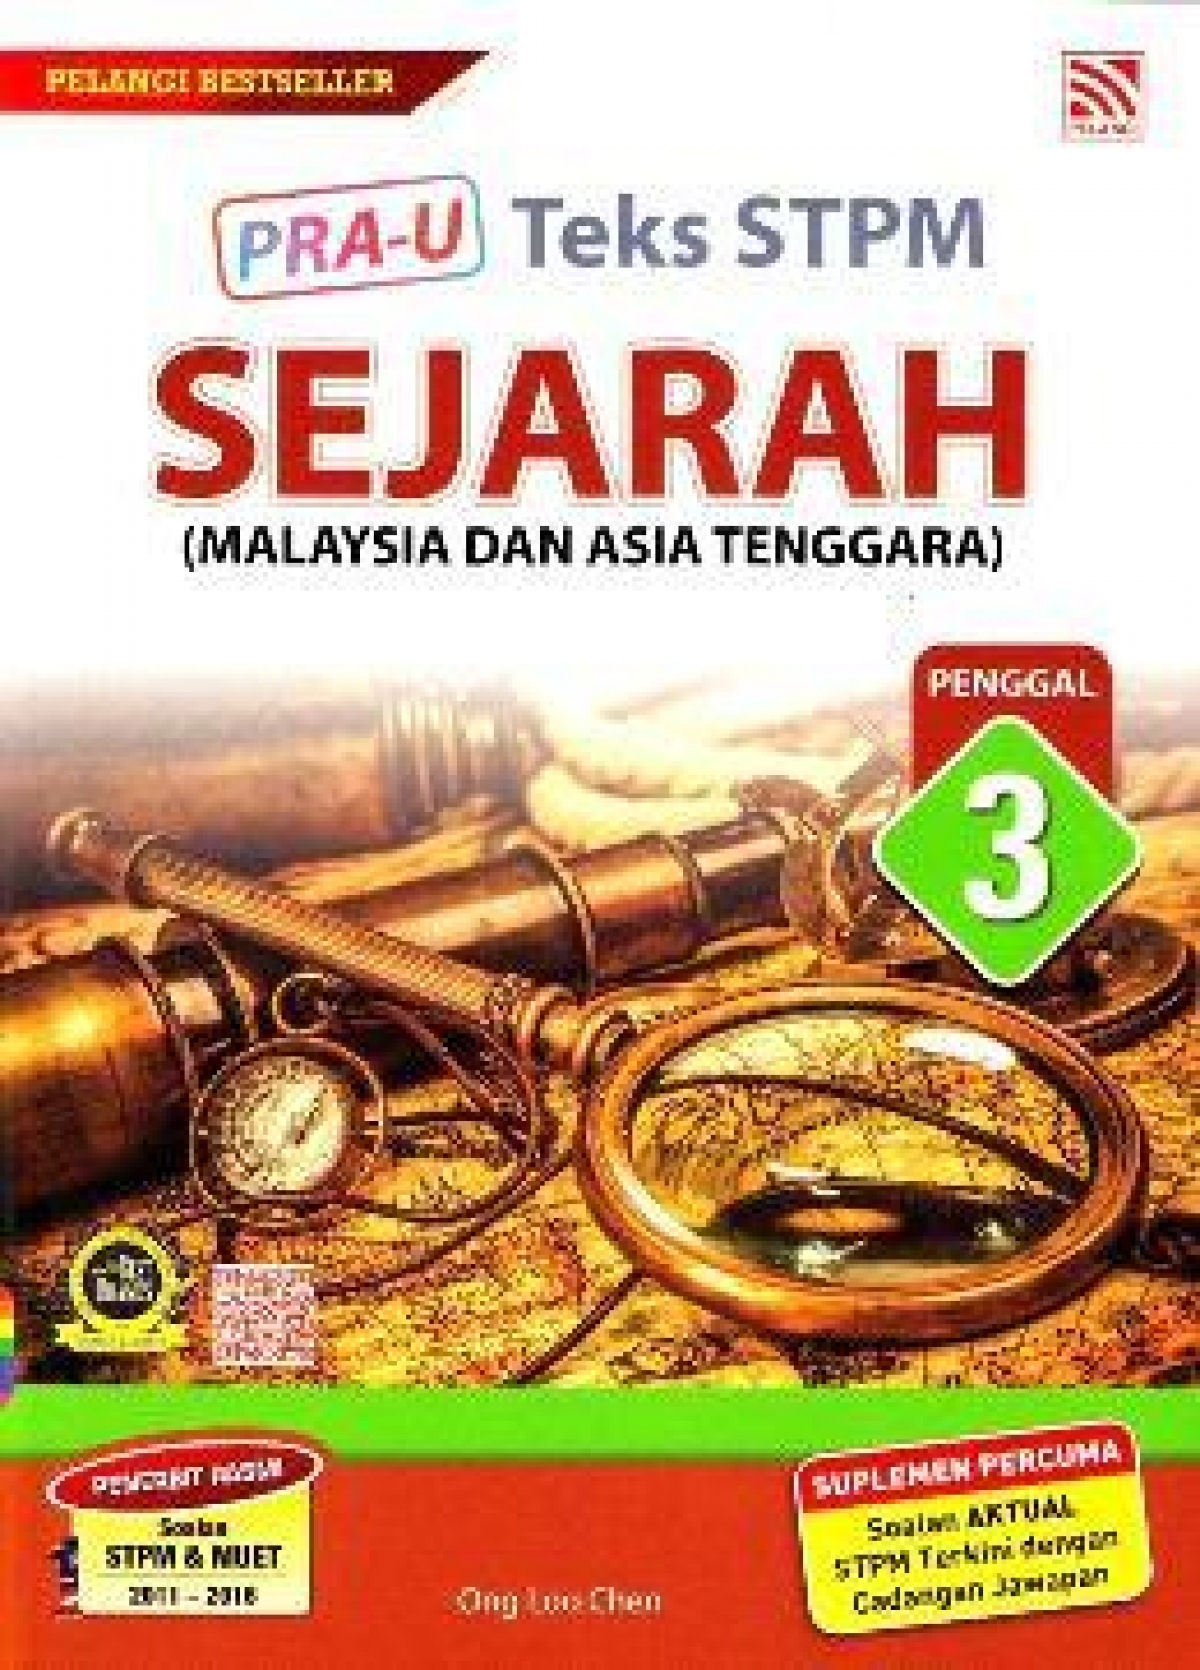 Pra U Teks Stpm Sejarah Malaysia Dan Asia Tenggara Penggal 3 Bukuboy Malaysia